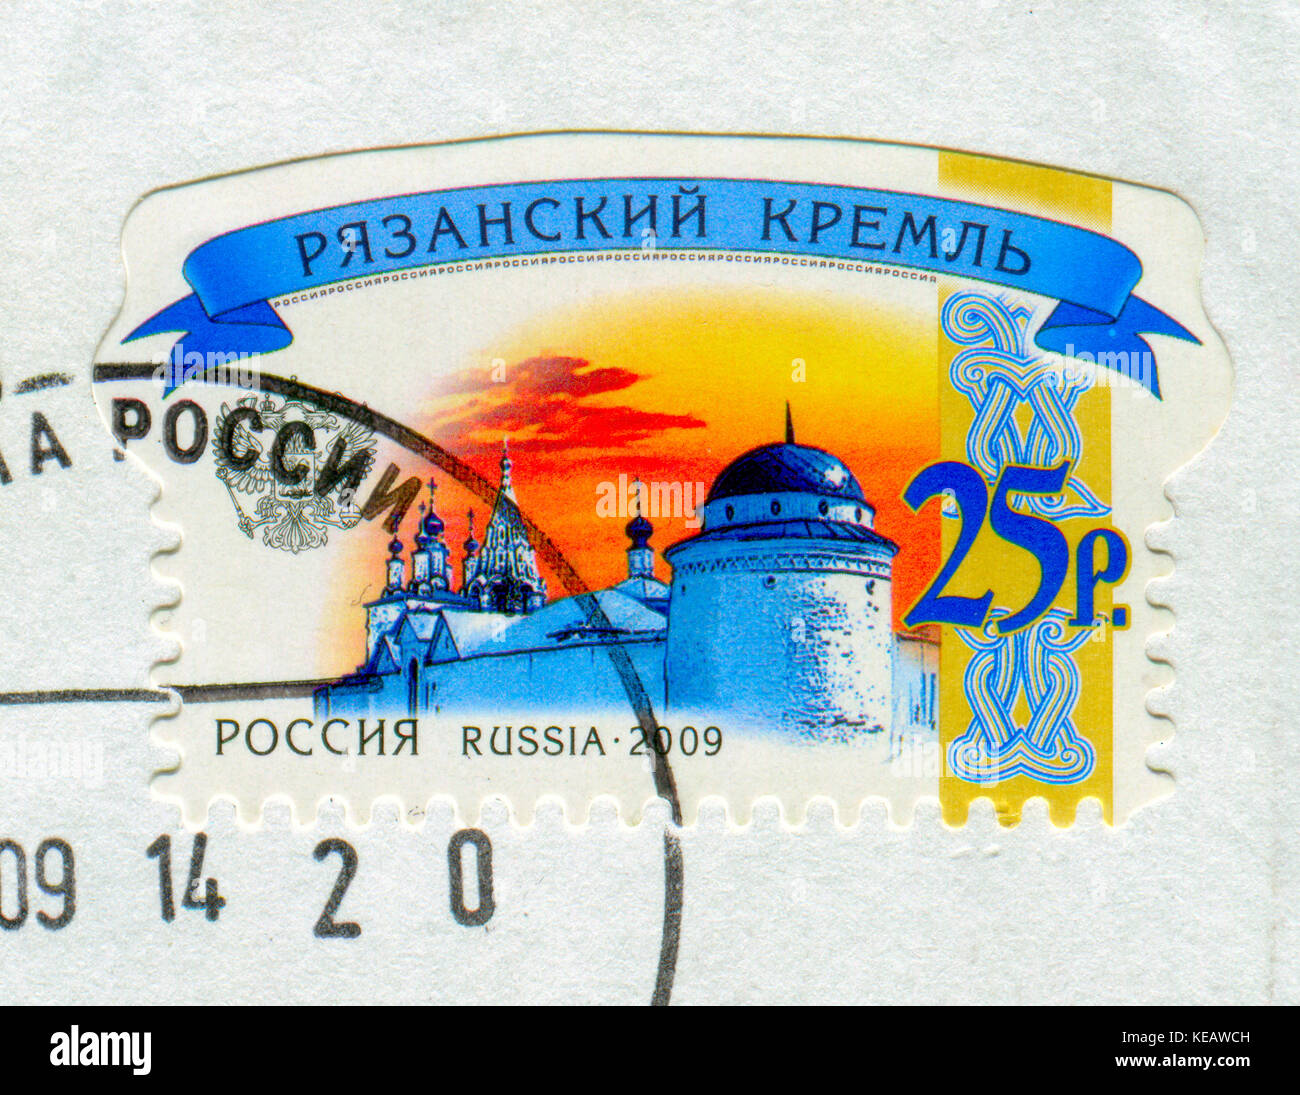 GOMEL, BÉLARUS, 13 octobre 2017, de timbres en Russie montre l'image de kremlin de Riazan, vers 2009. Banque D'Images